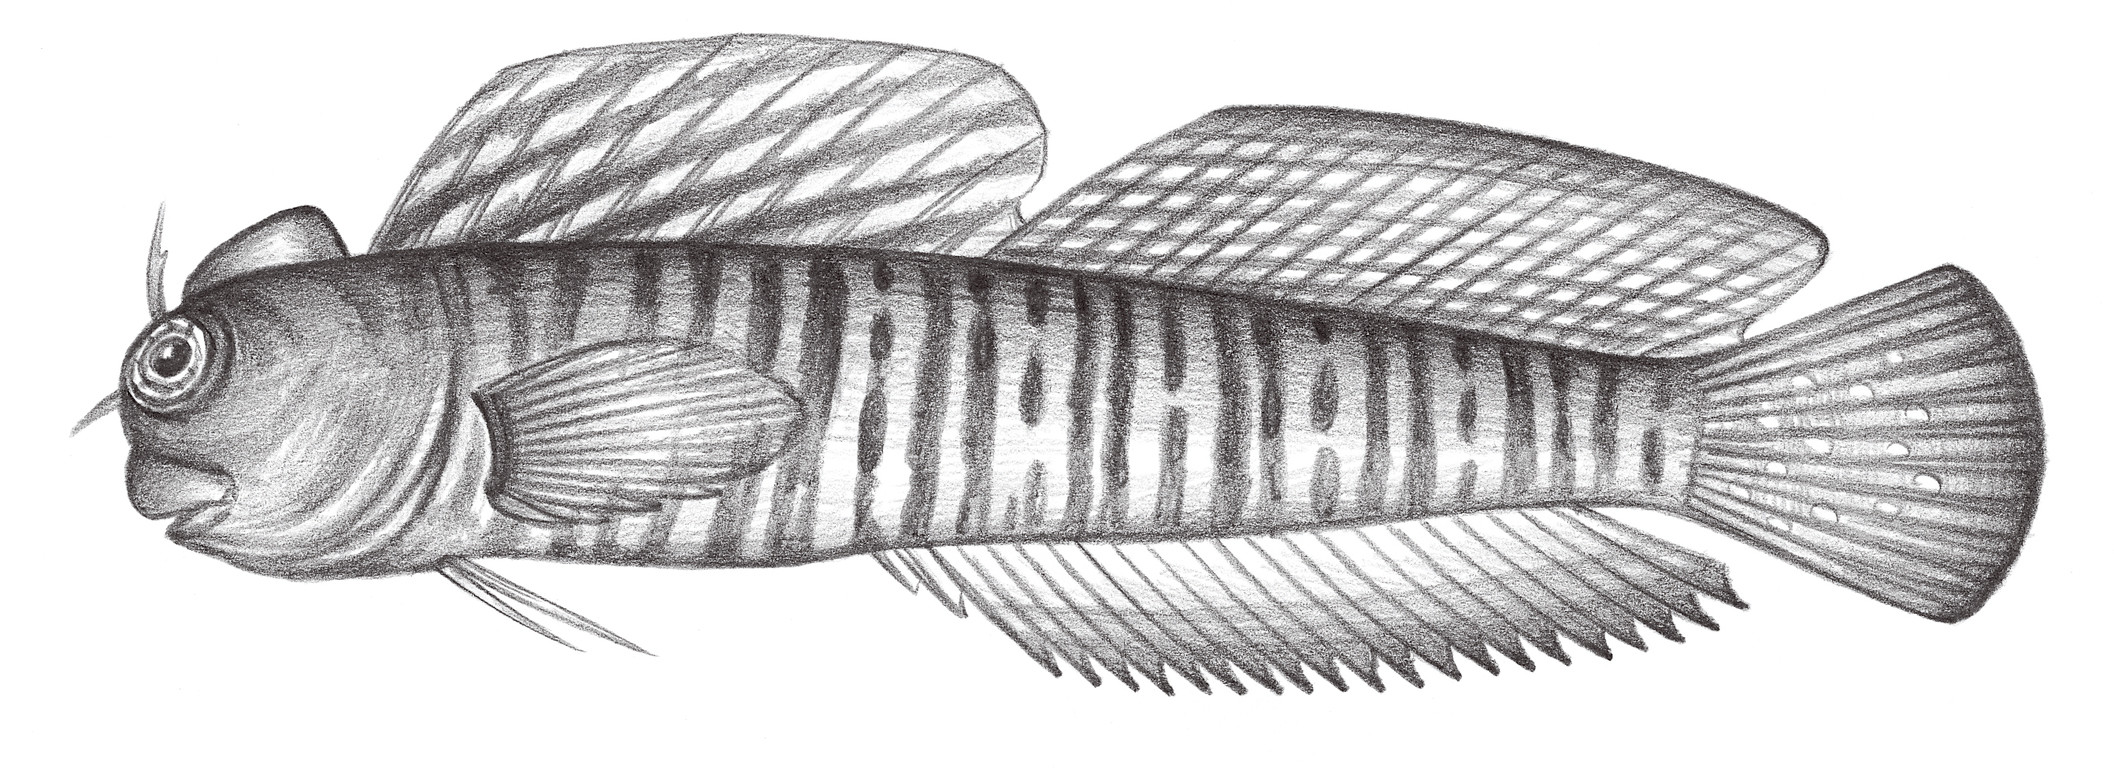 1976.	穆氏蛙鳚 Istiblennius muelleri (Klunzinger, 1879)